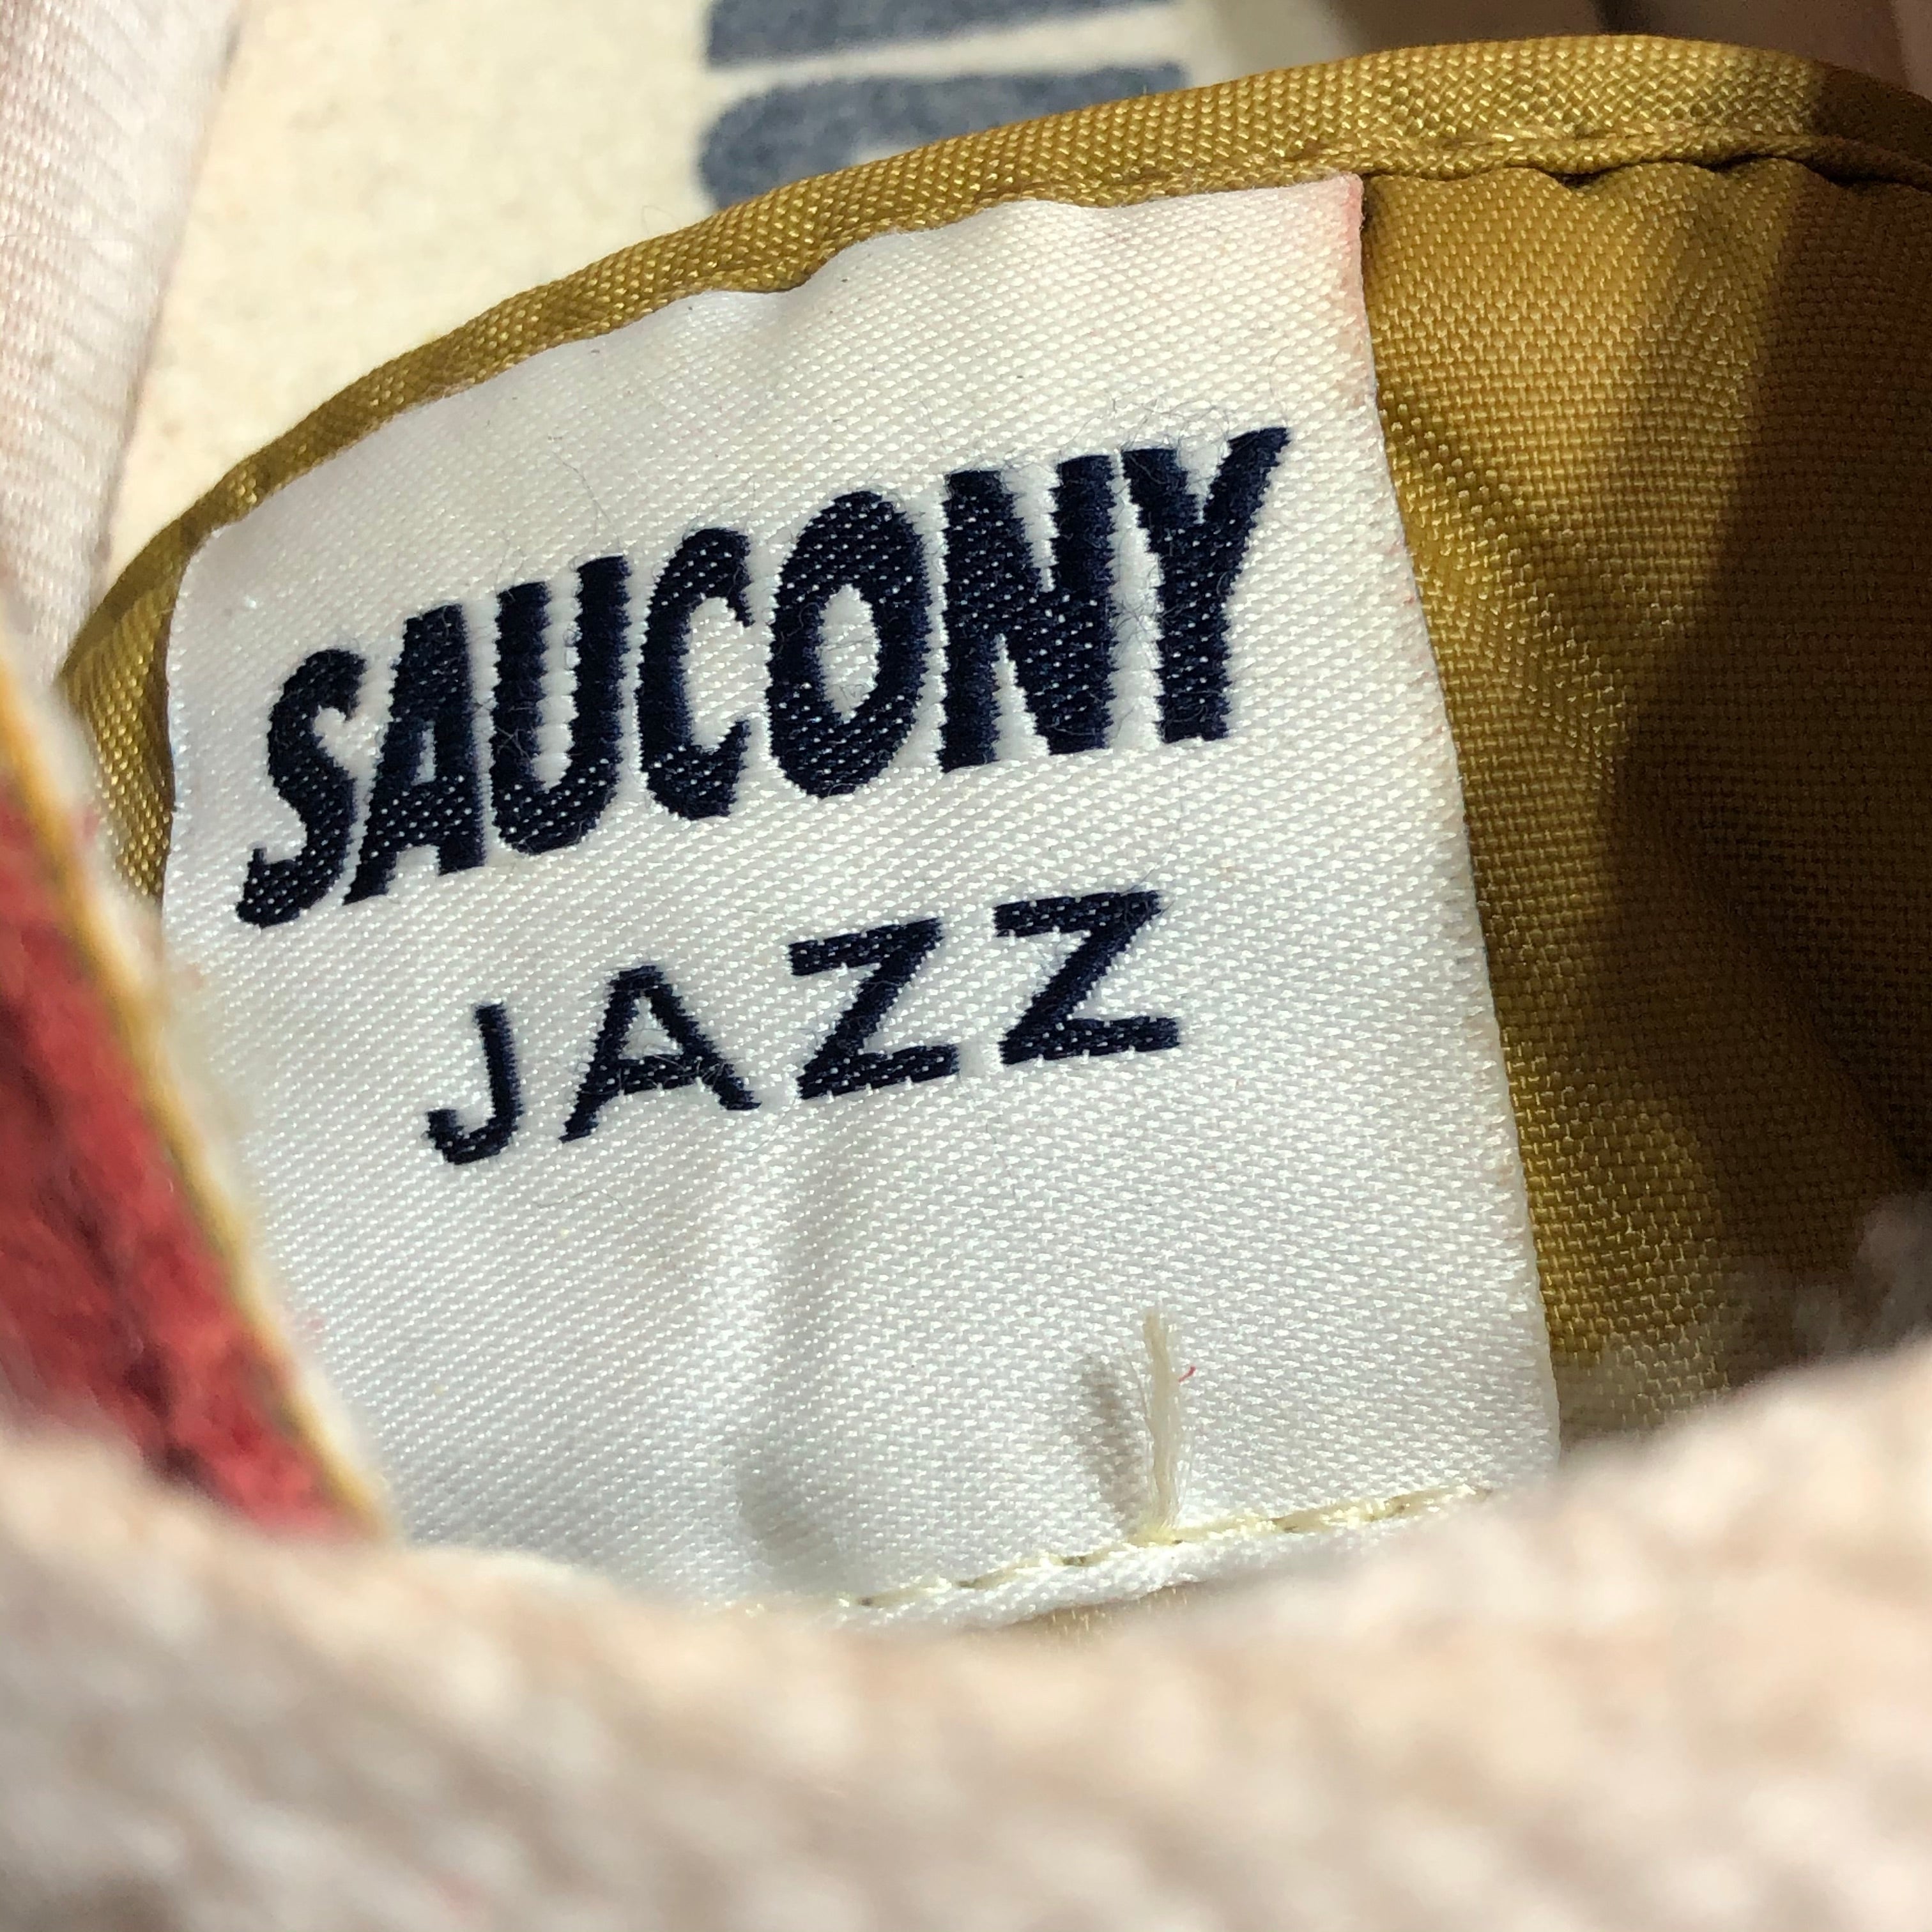 Vintage Saucony Sneakers